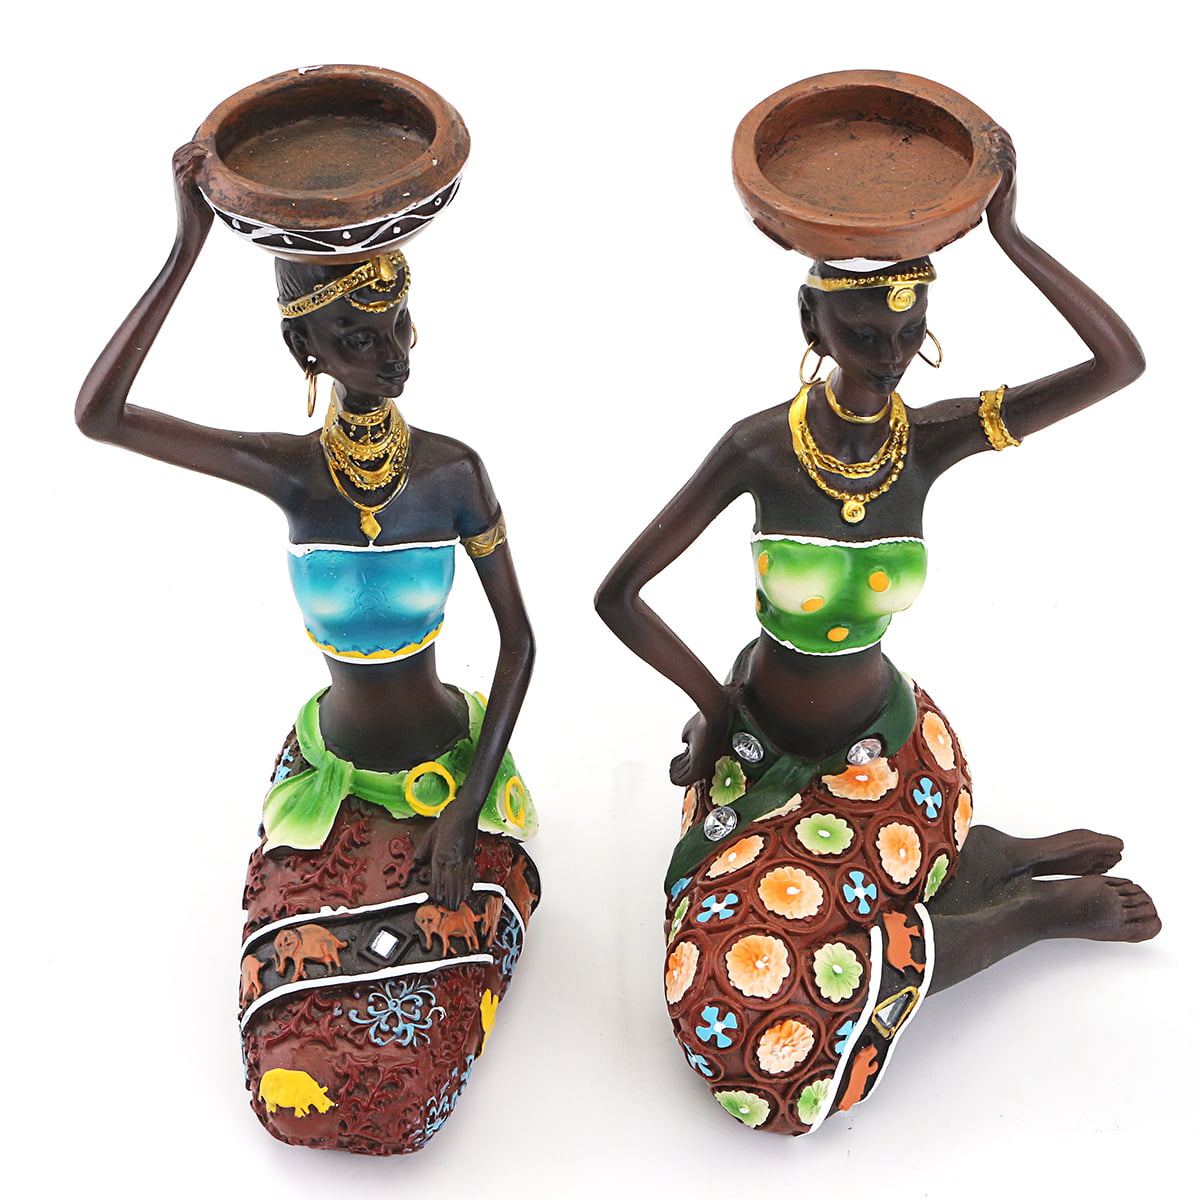 African Women Beauty Lady Decorative Statue Home Decor Resin Figurine Craft 